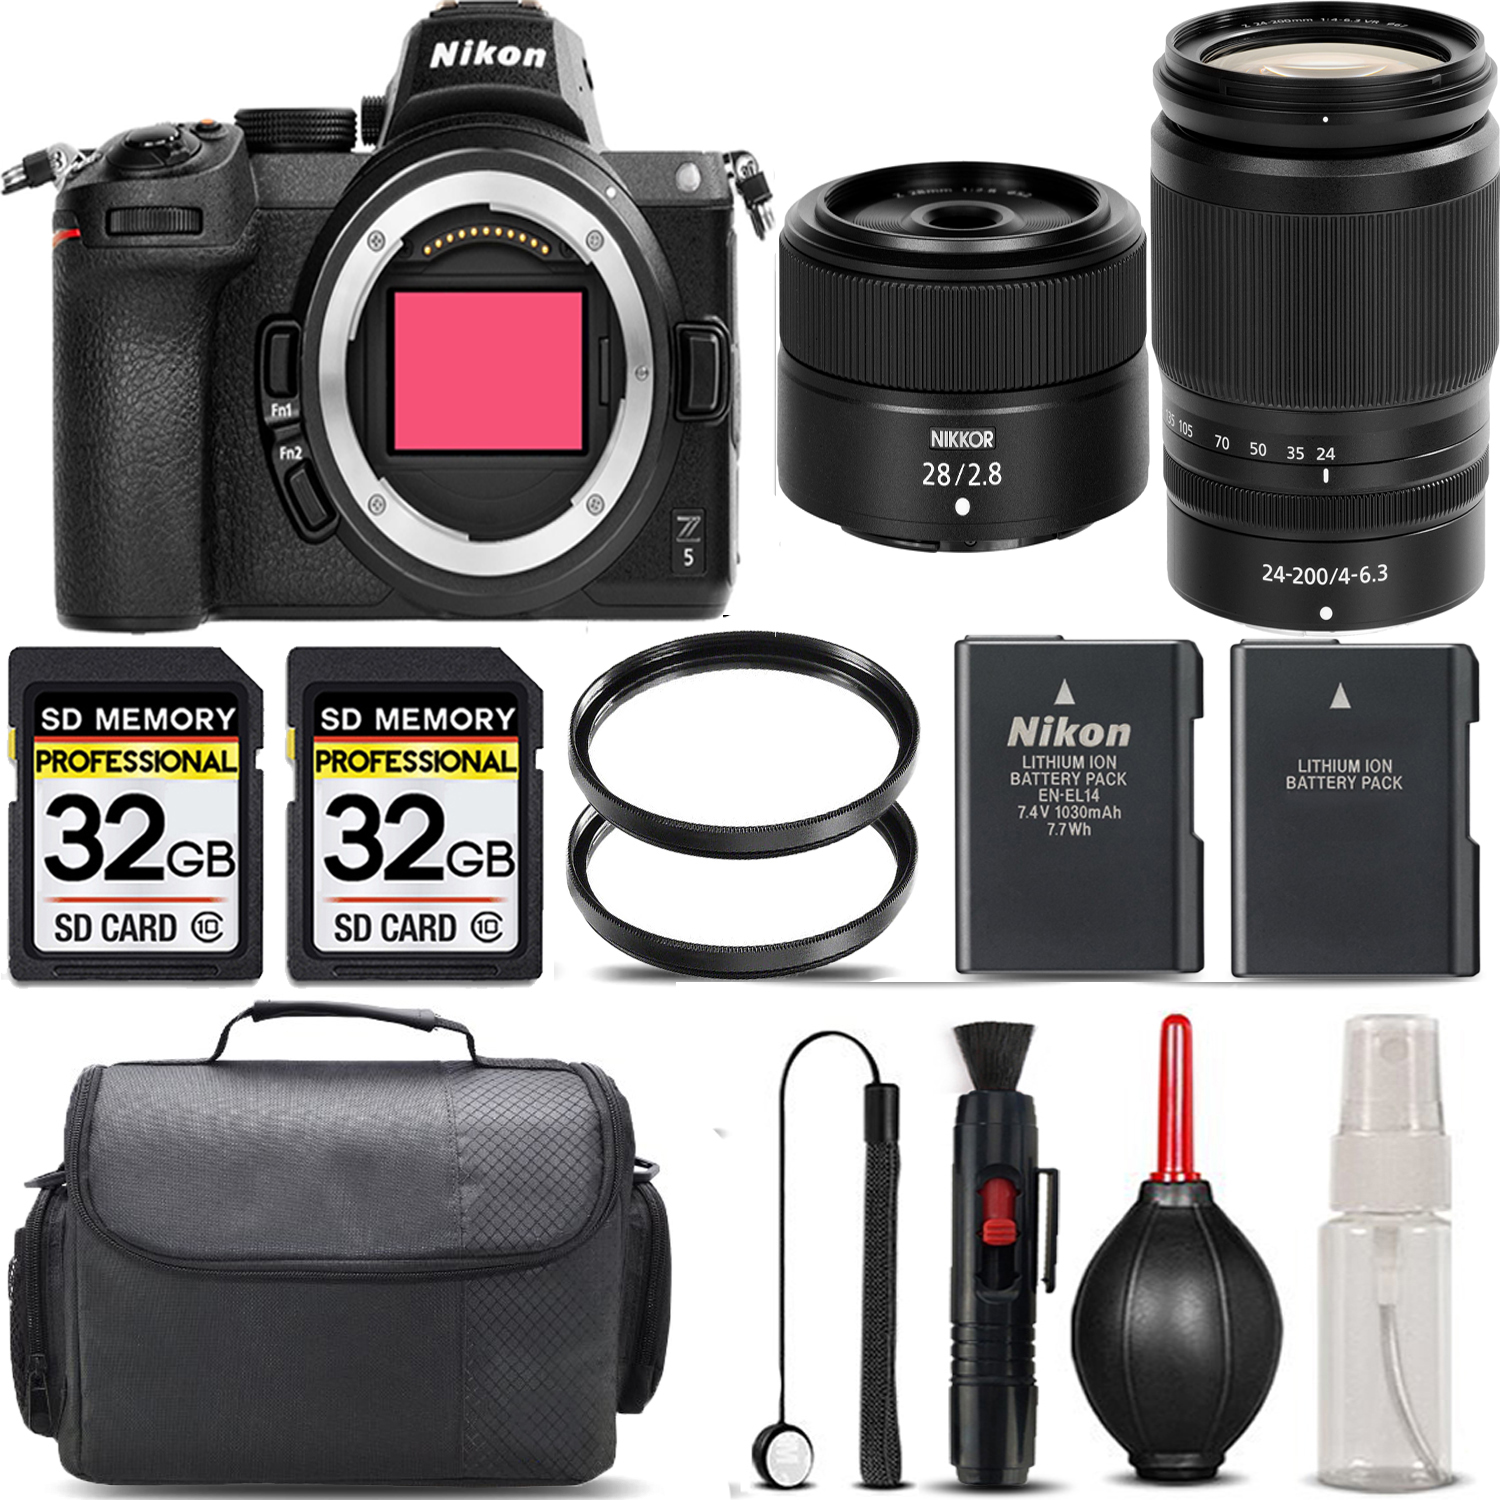 Z5 Camera + 24-200mm VR Lens + 28mm f/2.8 Lens + 64GB - SAVE BIG KIT *FREE SHIPPING*